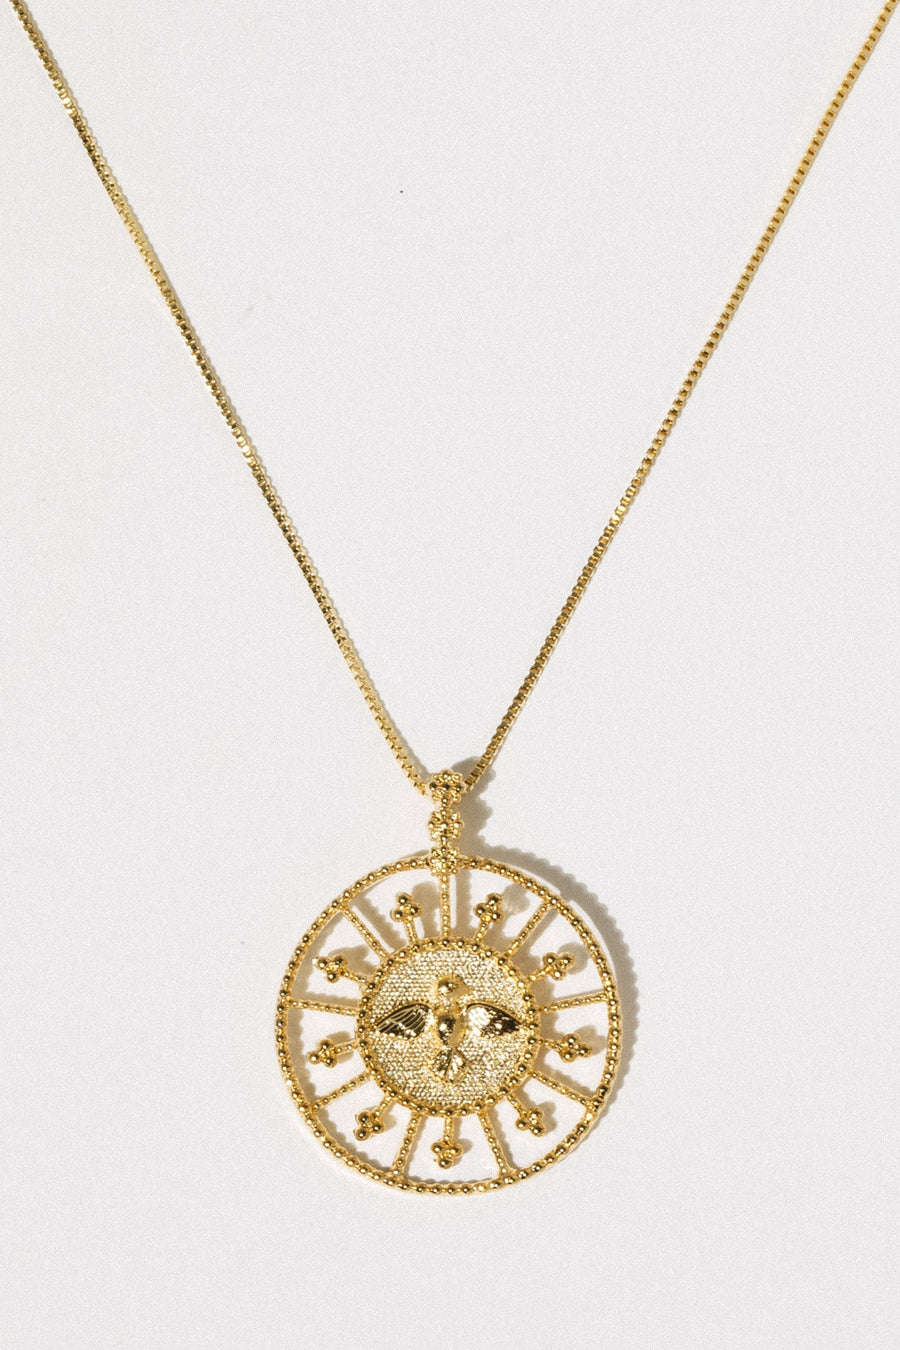 Dona Italia Jewelry Feathers of Peace Necklace